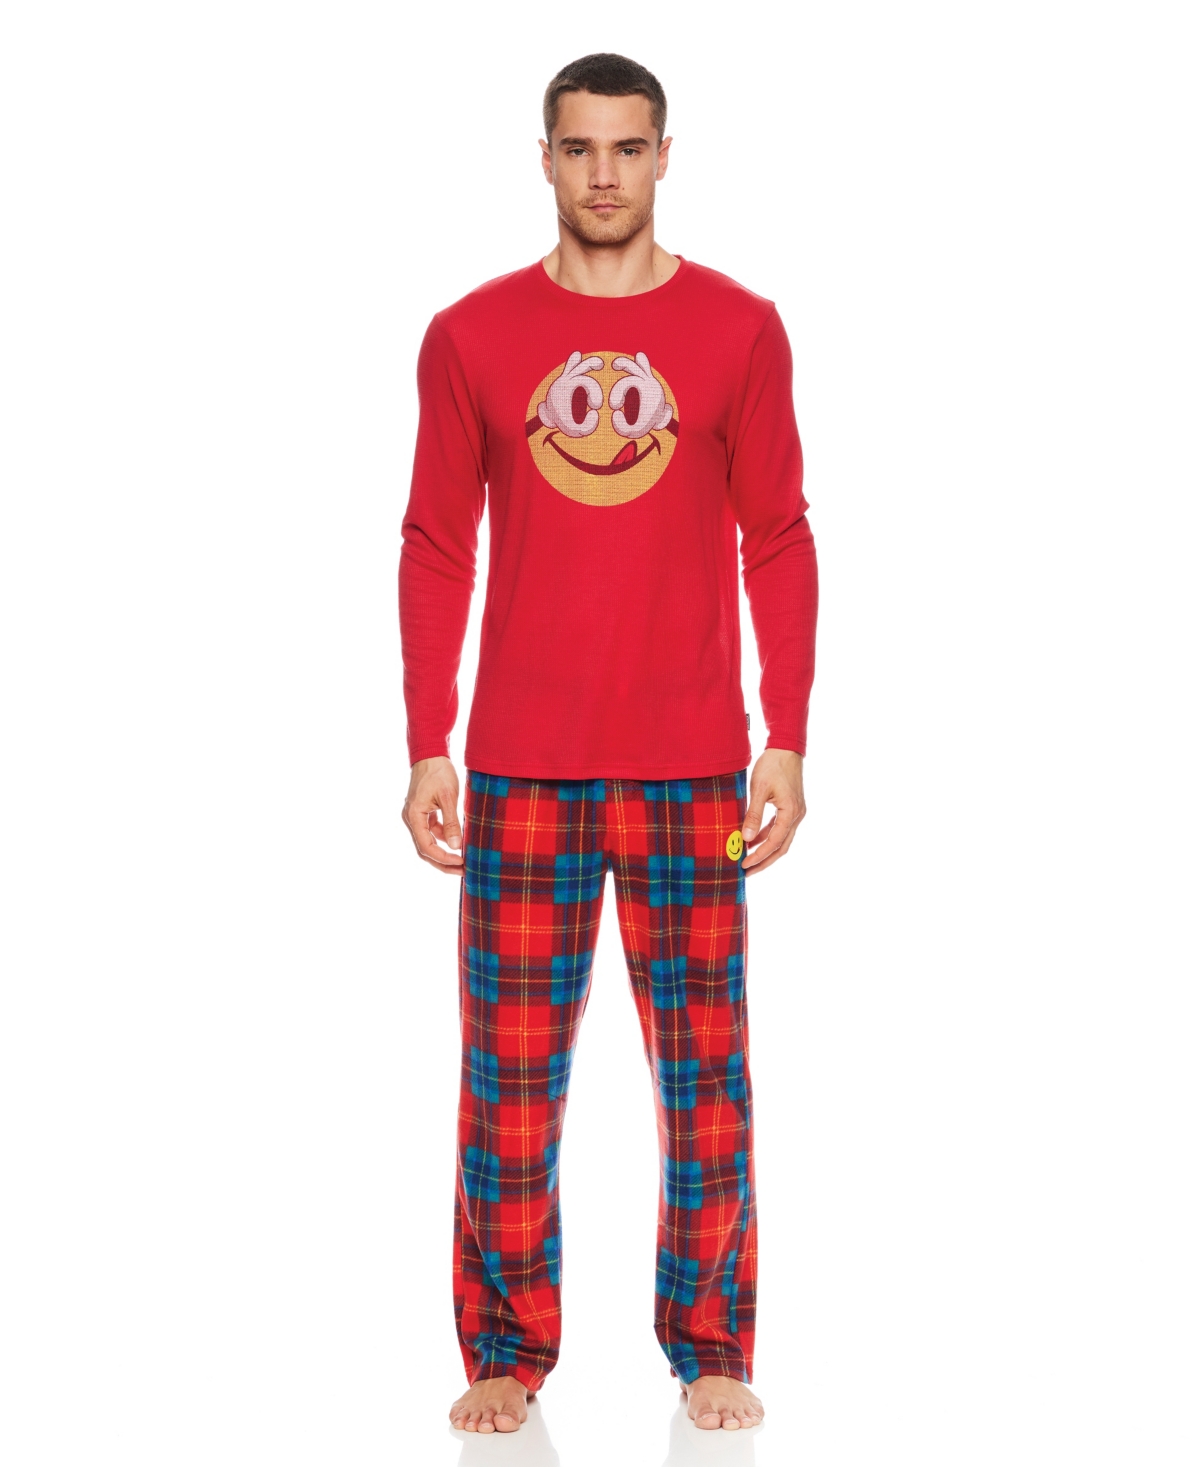 Men's Top, Shorts and Pajamas, 3 Piece Set - Red